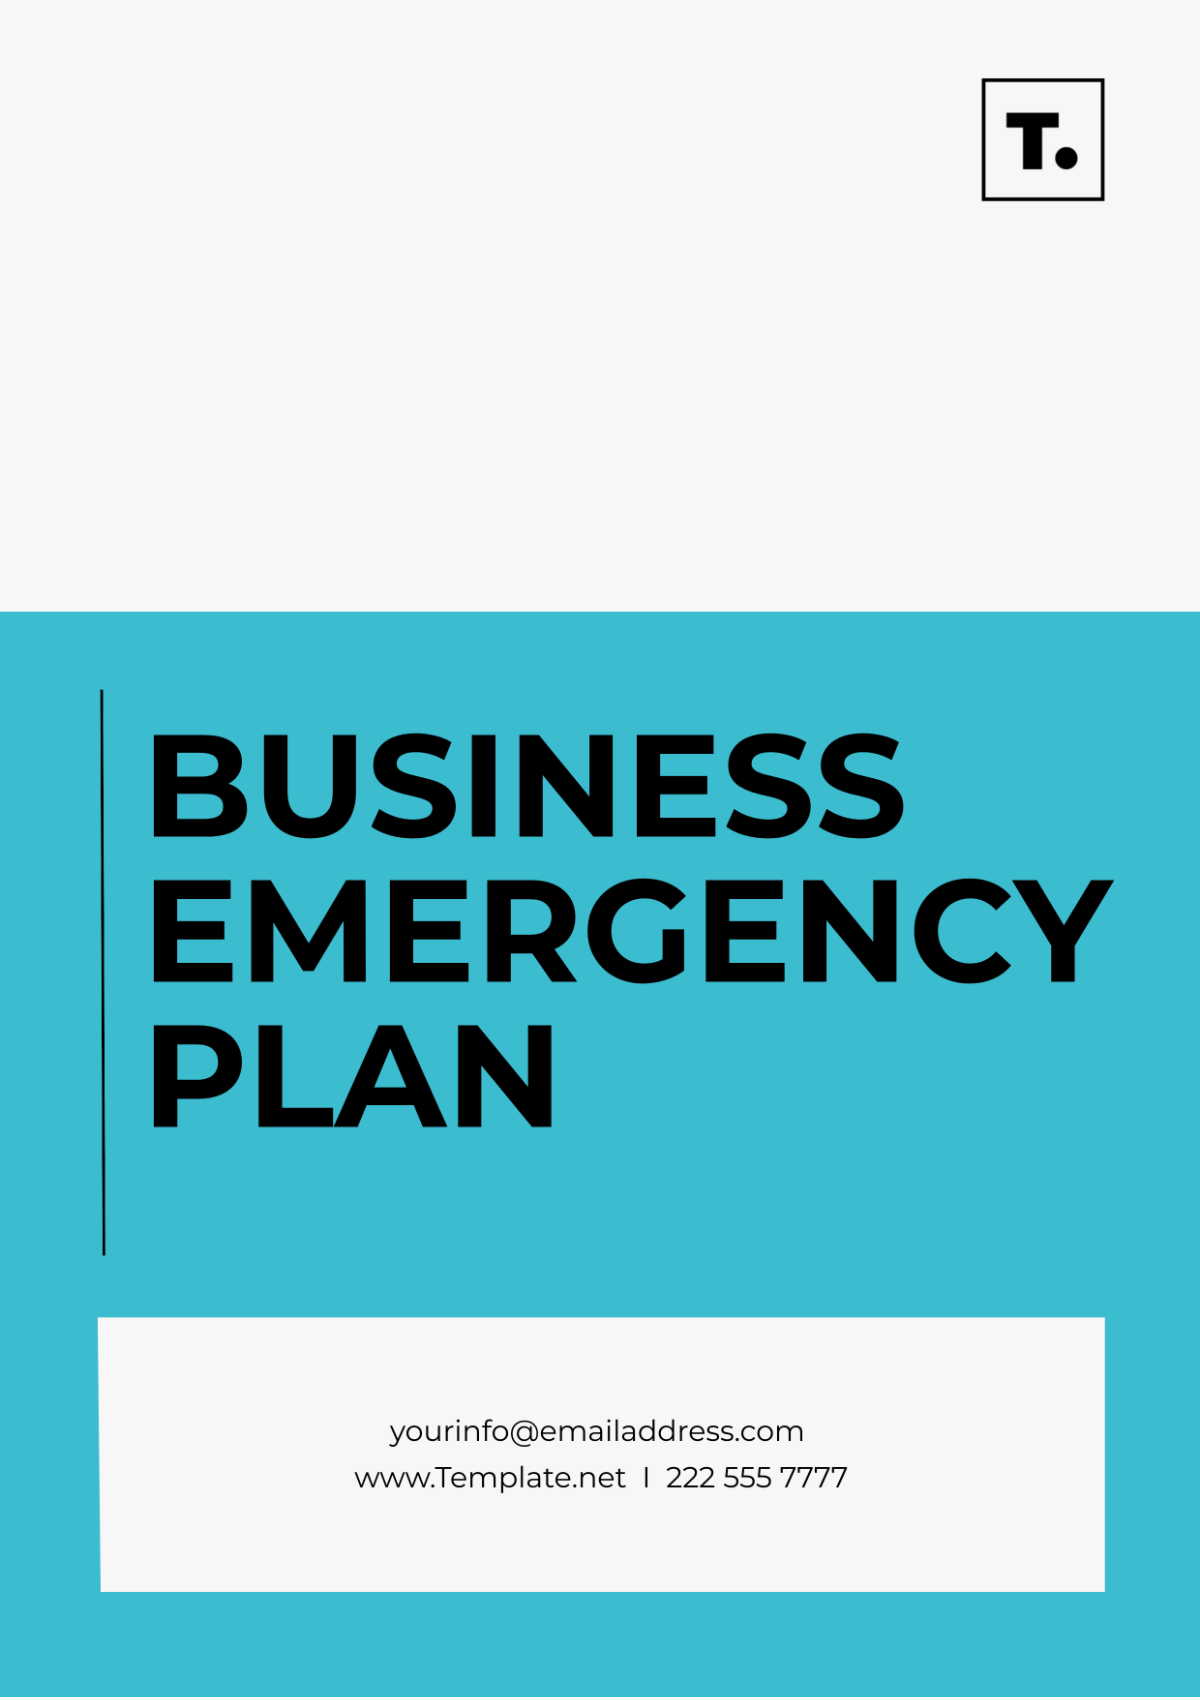 Business Emergency Plan Template